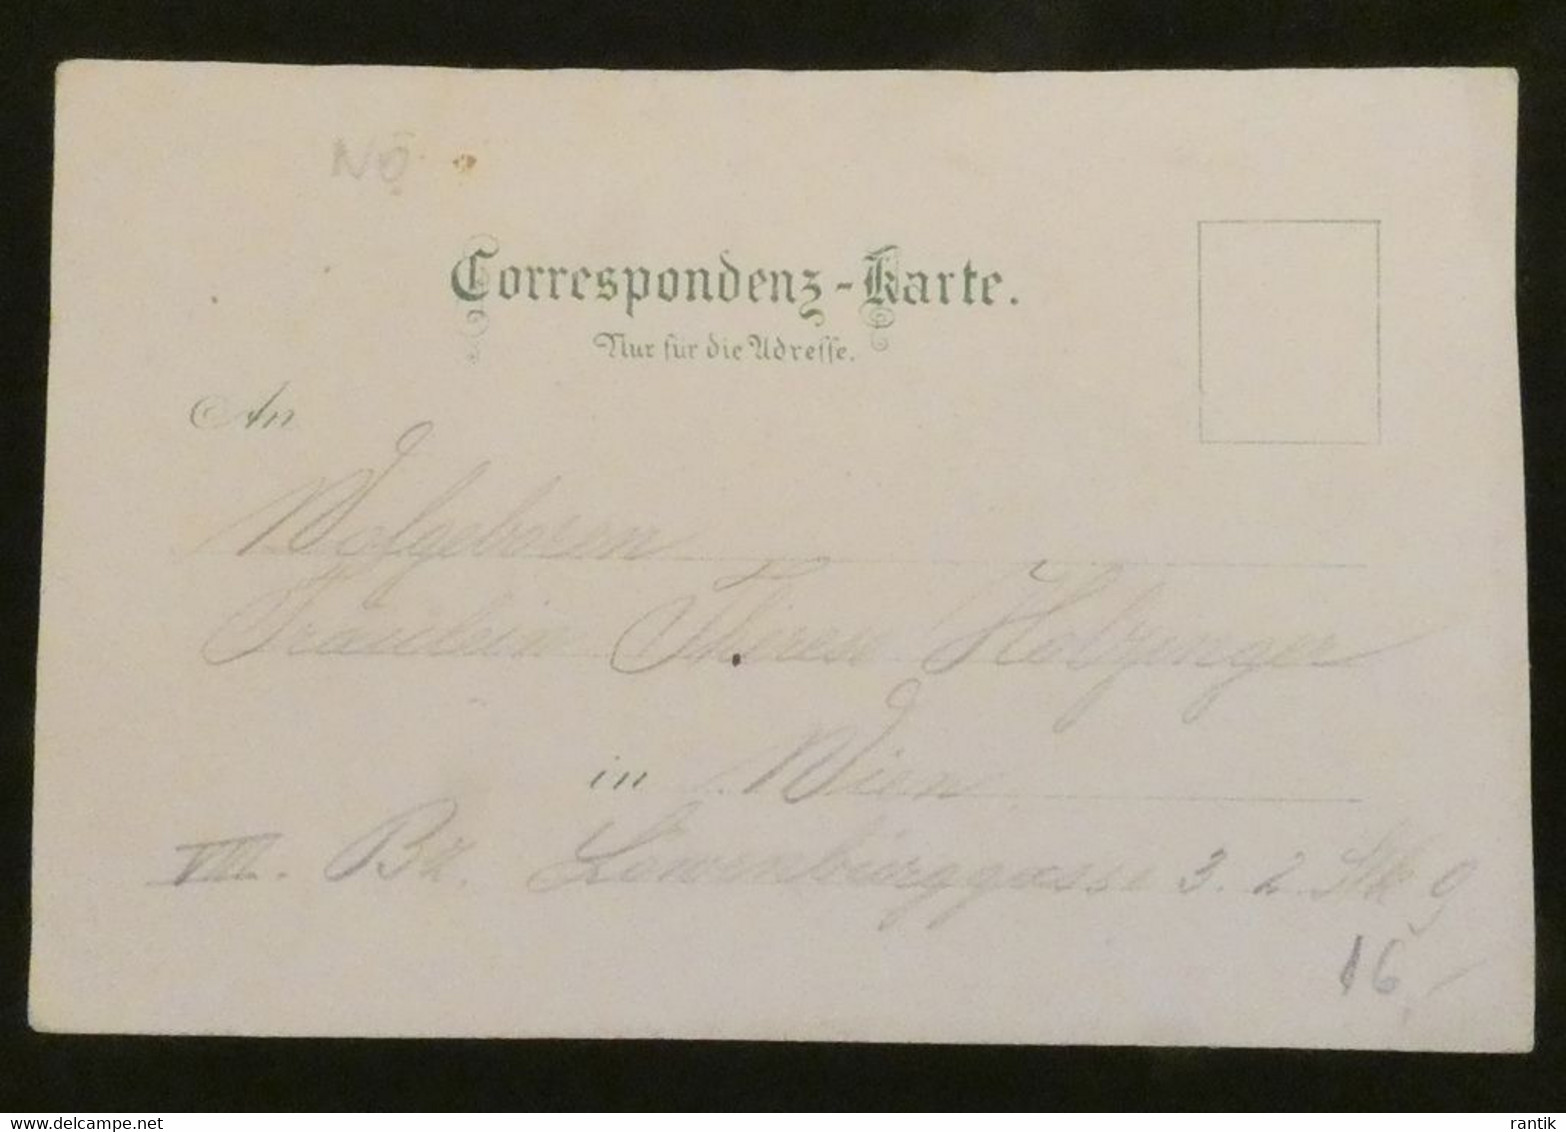 Lithographie Perchtoldsdorf 1897, Druck Regel, Krug - Perchtoldsdorf